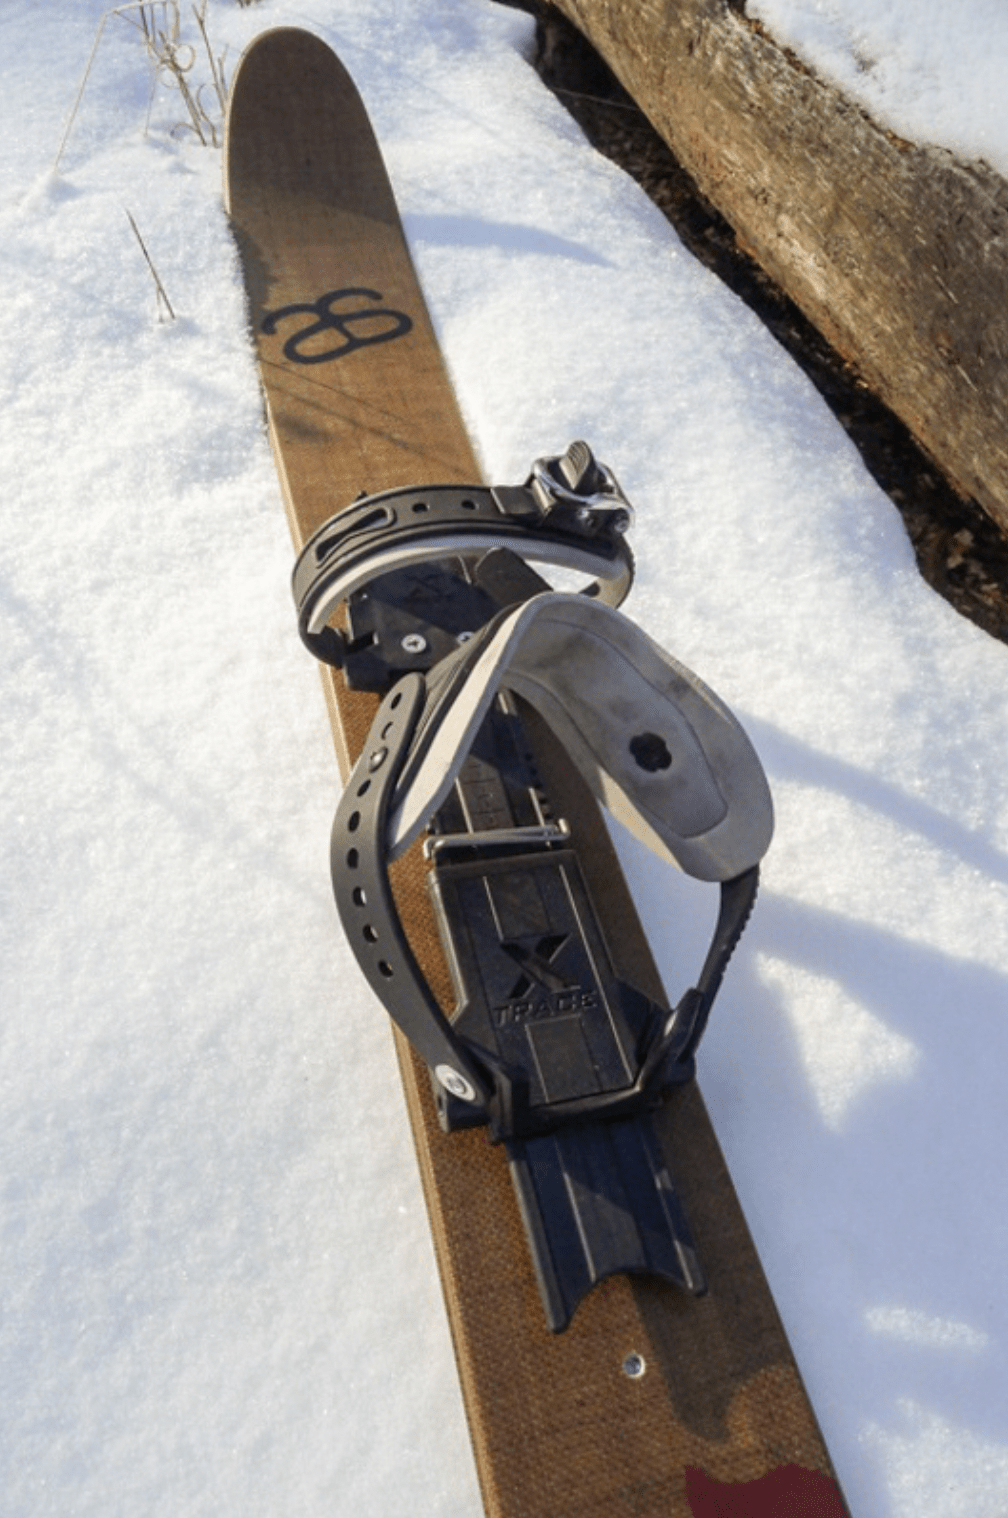 Hok Ski 145cm Pivot – With Tracks Outdoors Universal Fresh Binding